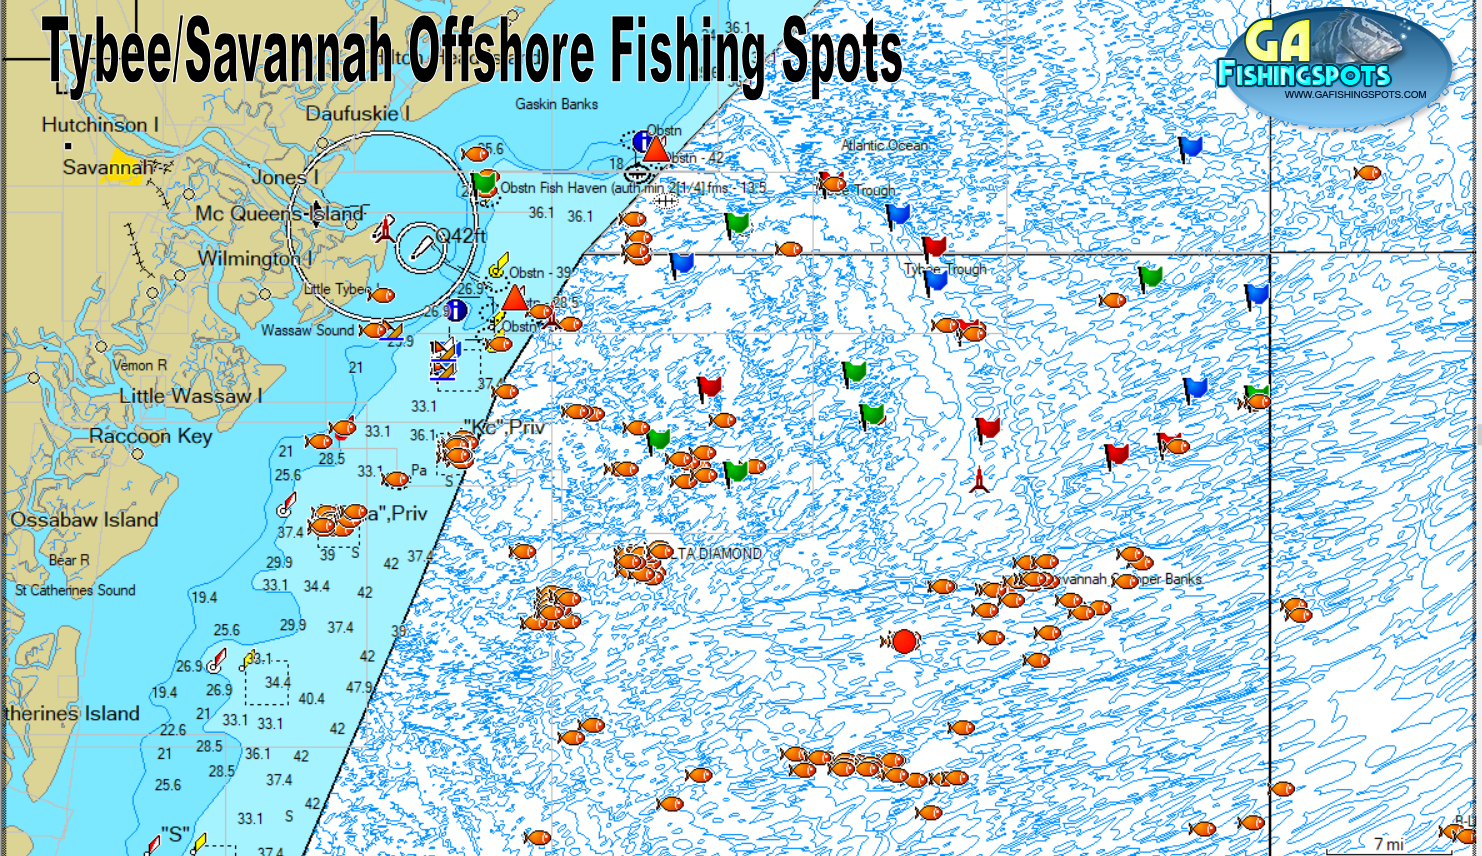 Tybee Savannah Offshore Fishing Spots [includes Savannah Snapper Banks  spots]